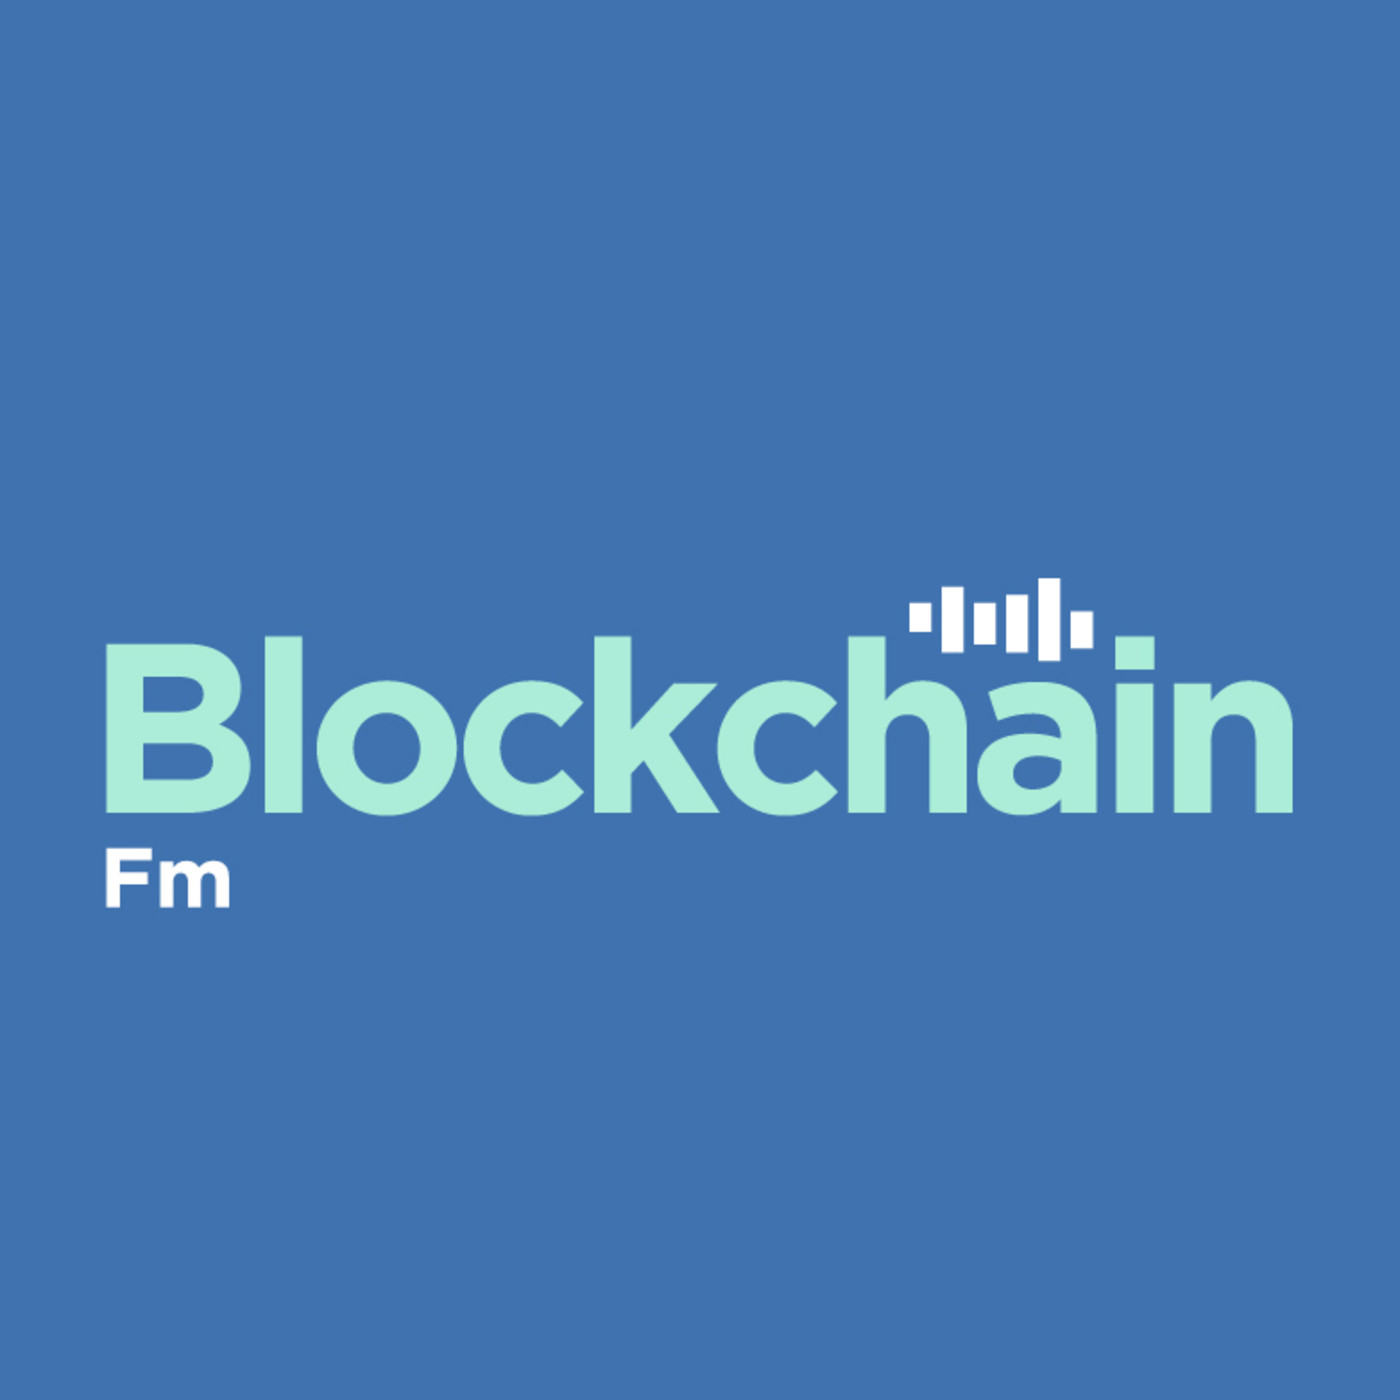 Blockchain Fm